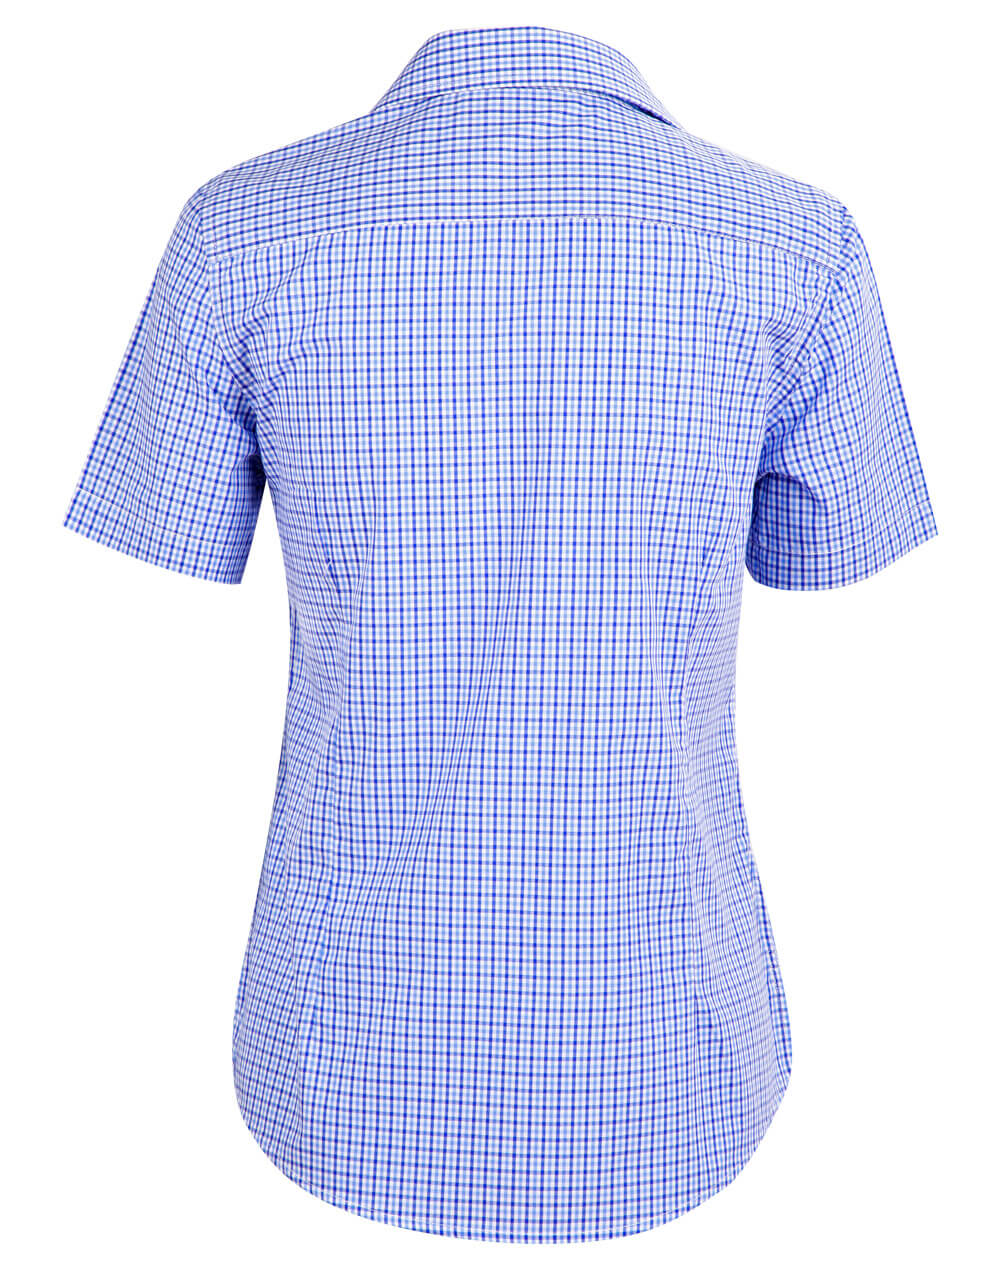 M8320S Ladies’ Multi_Tone Check Short Sleeve Shirt